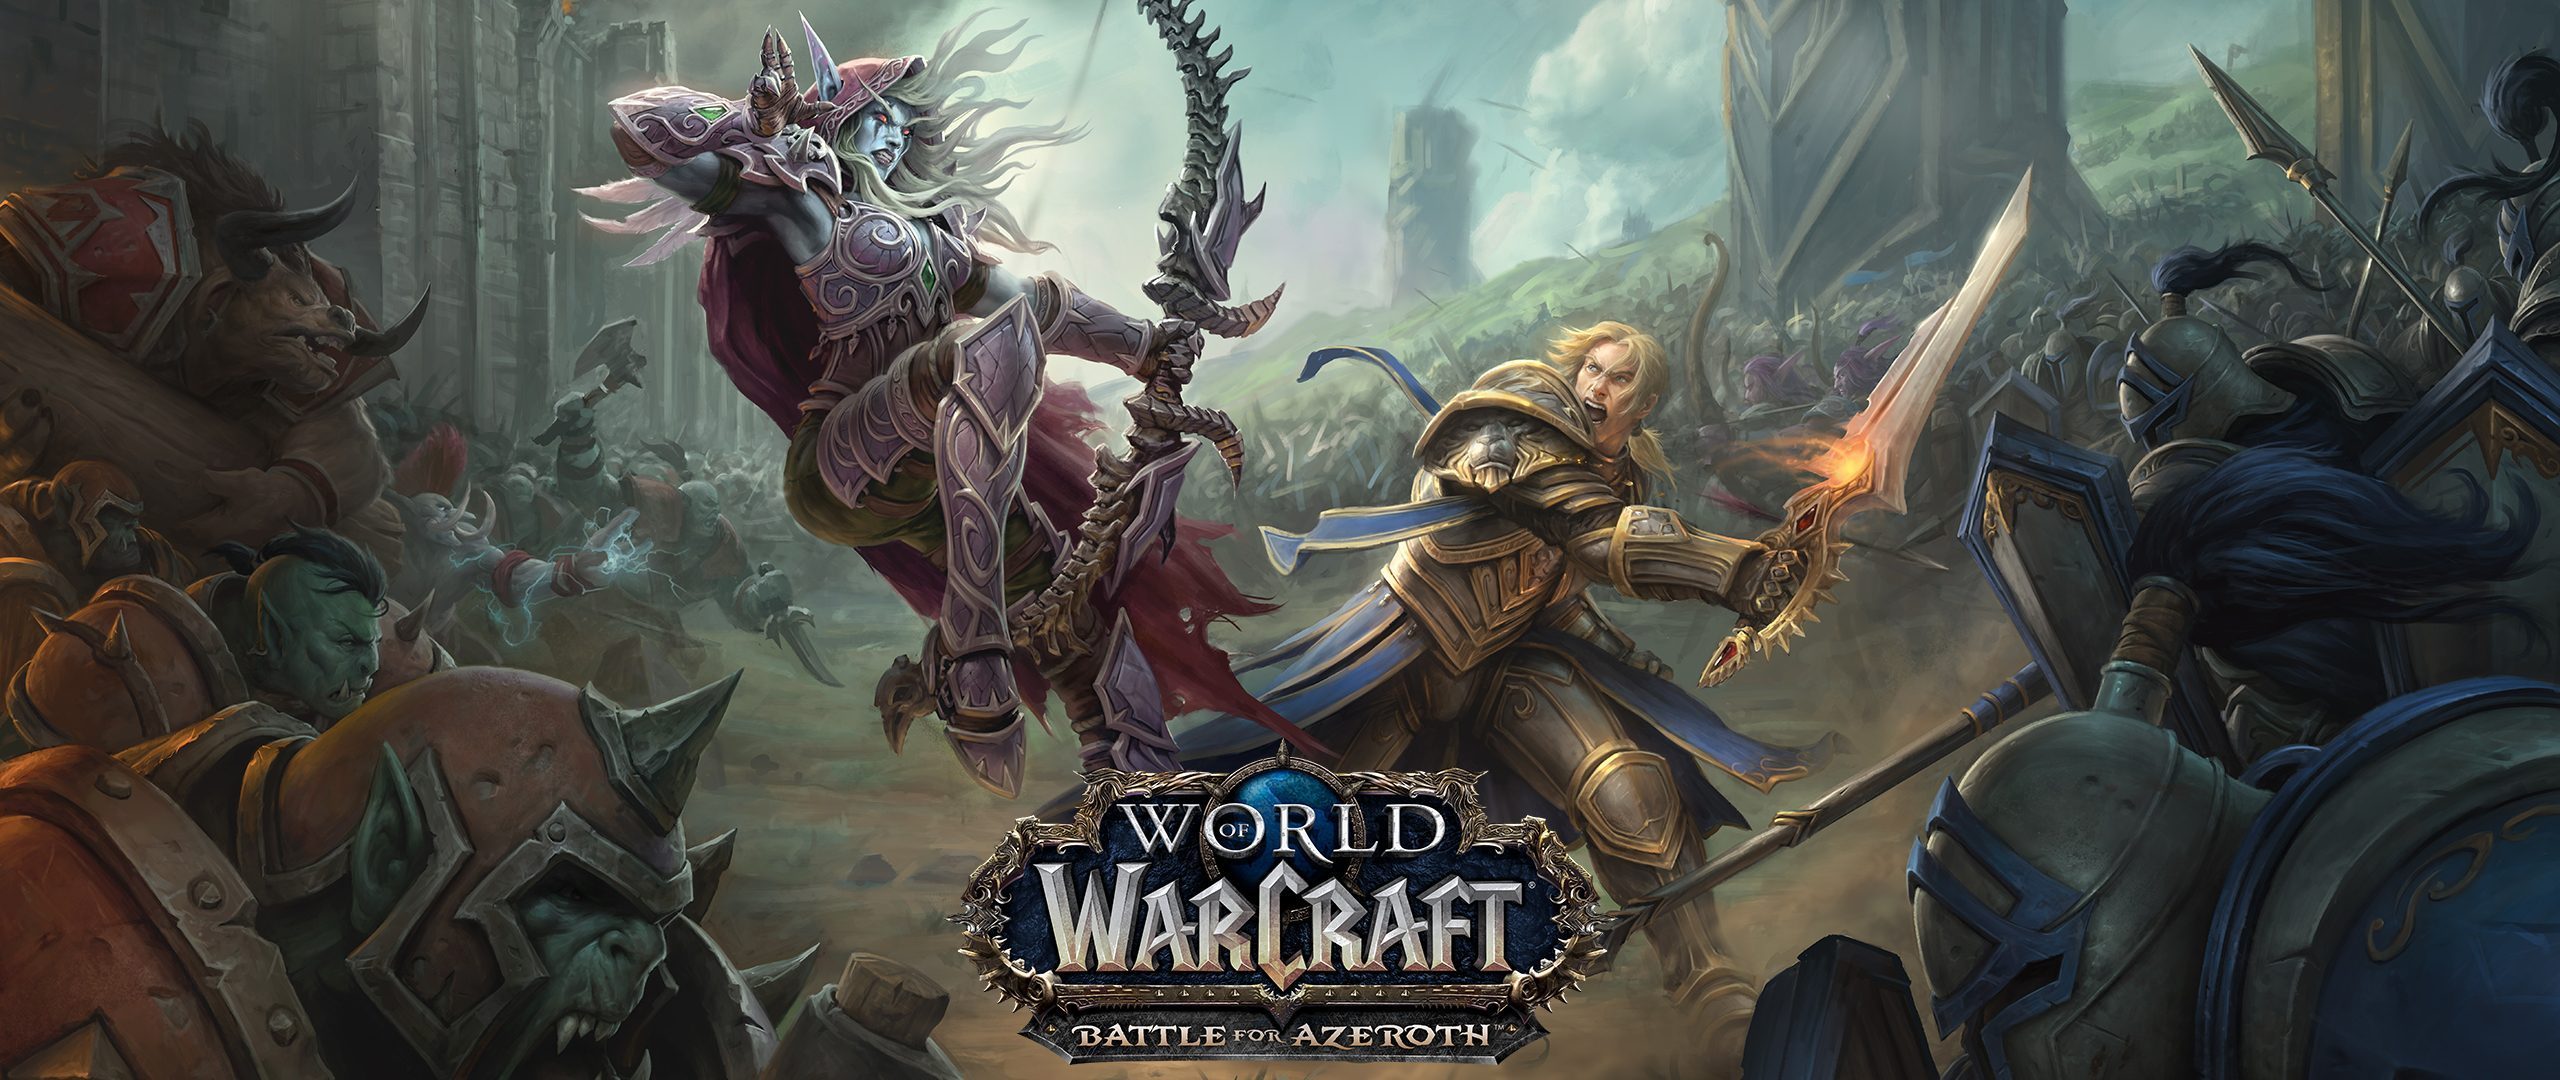 World of Warcraft ya no es el Caballo Insignia de Blizzard